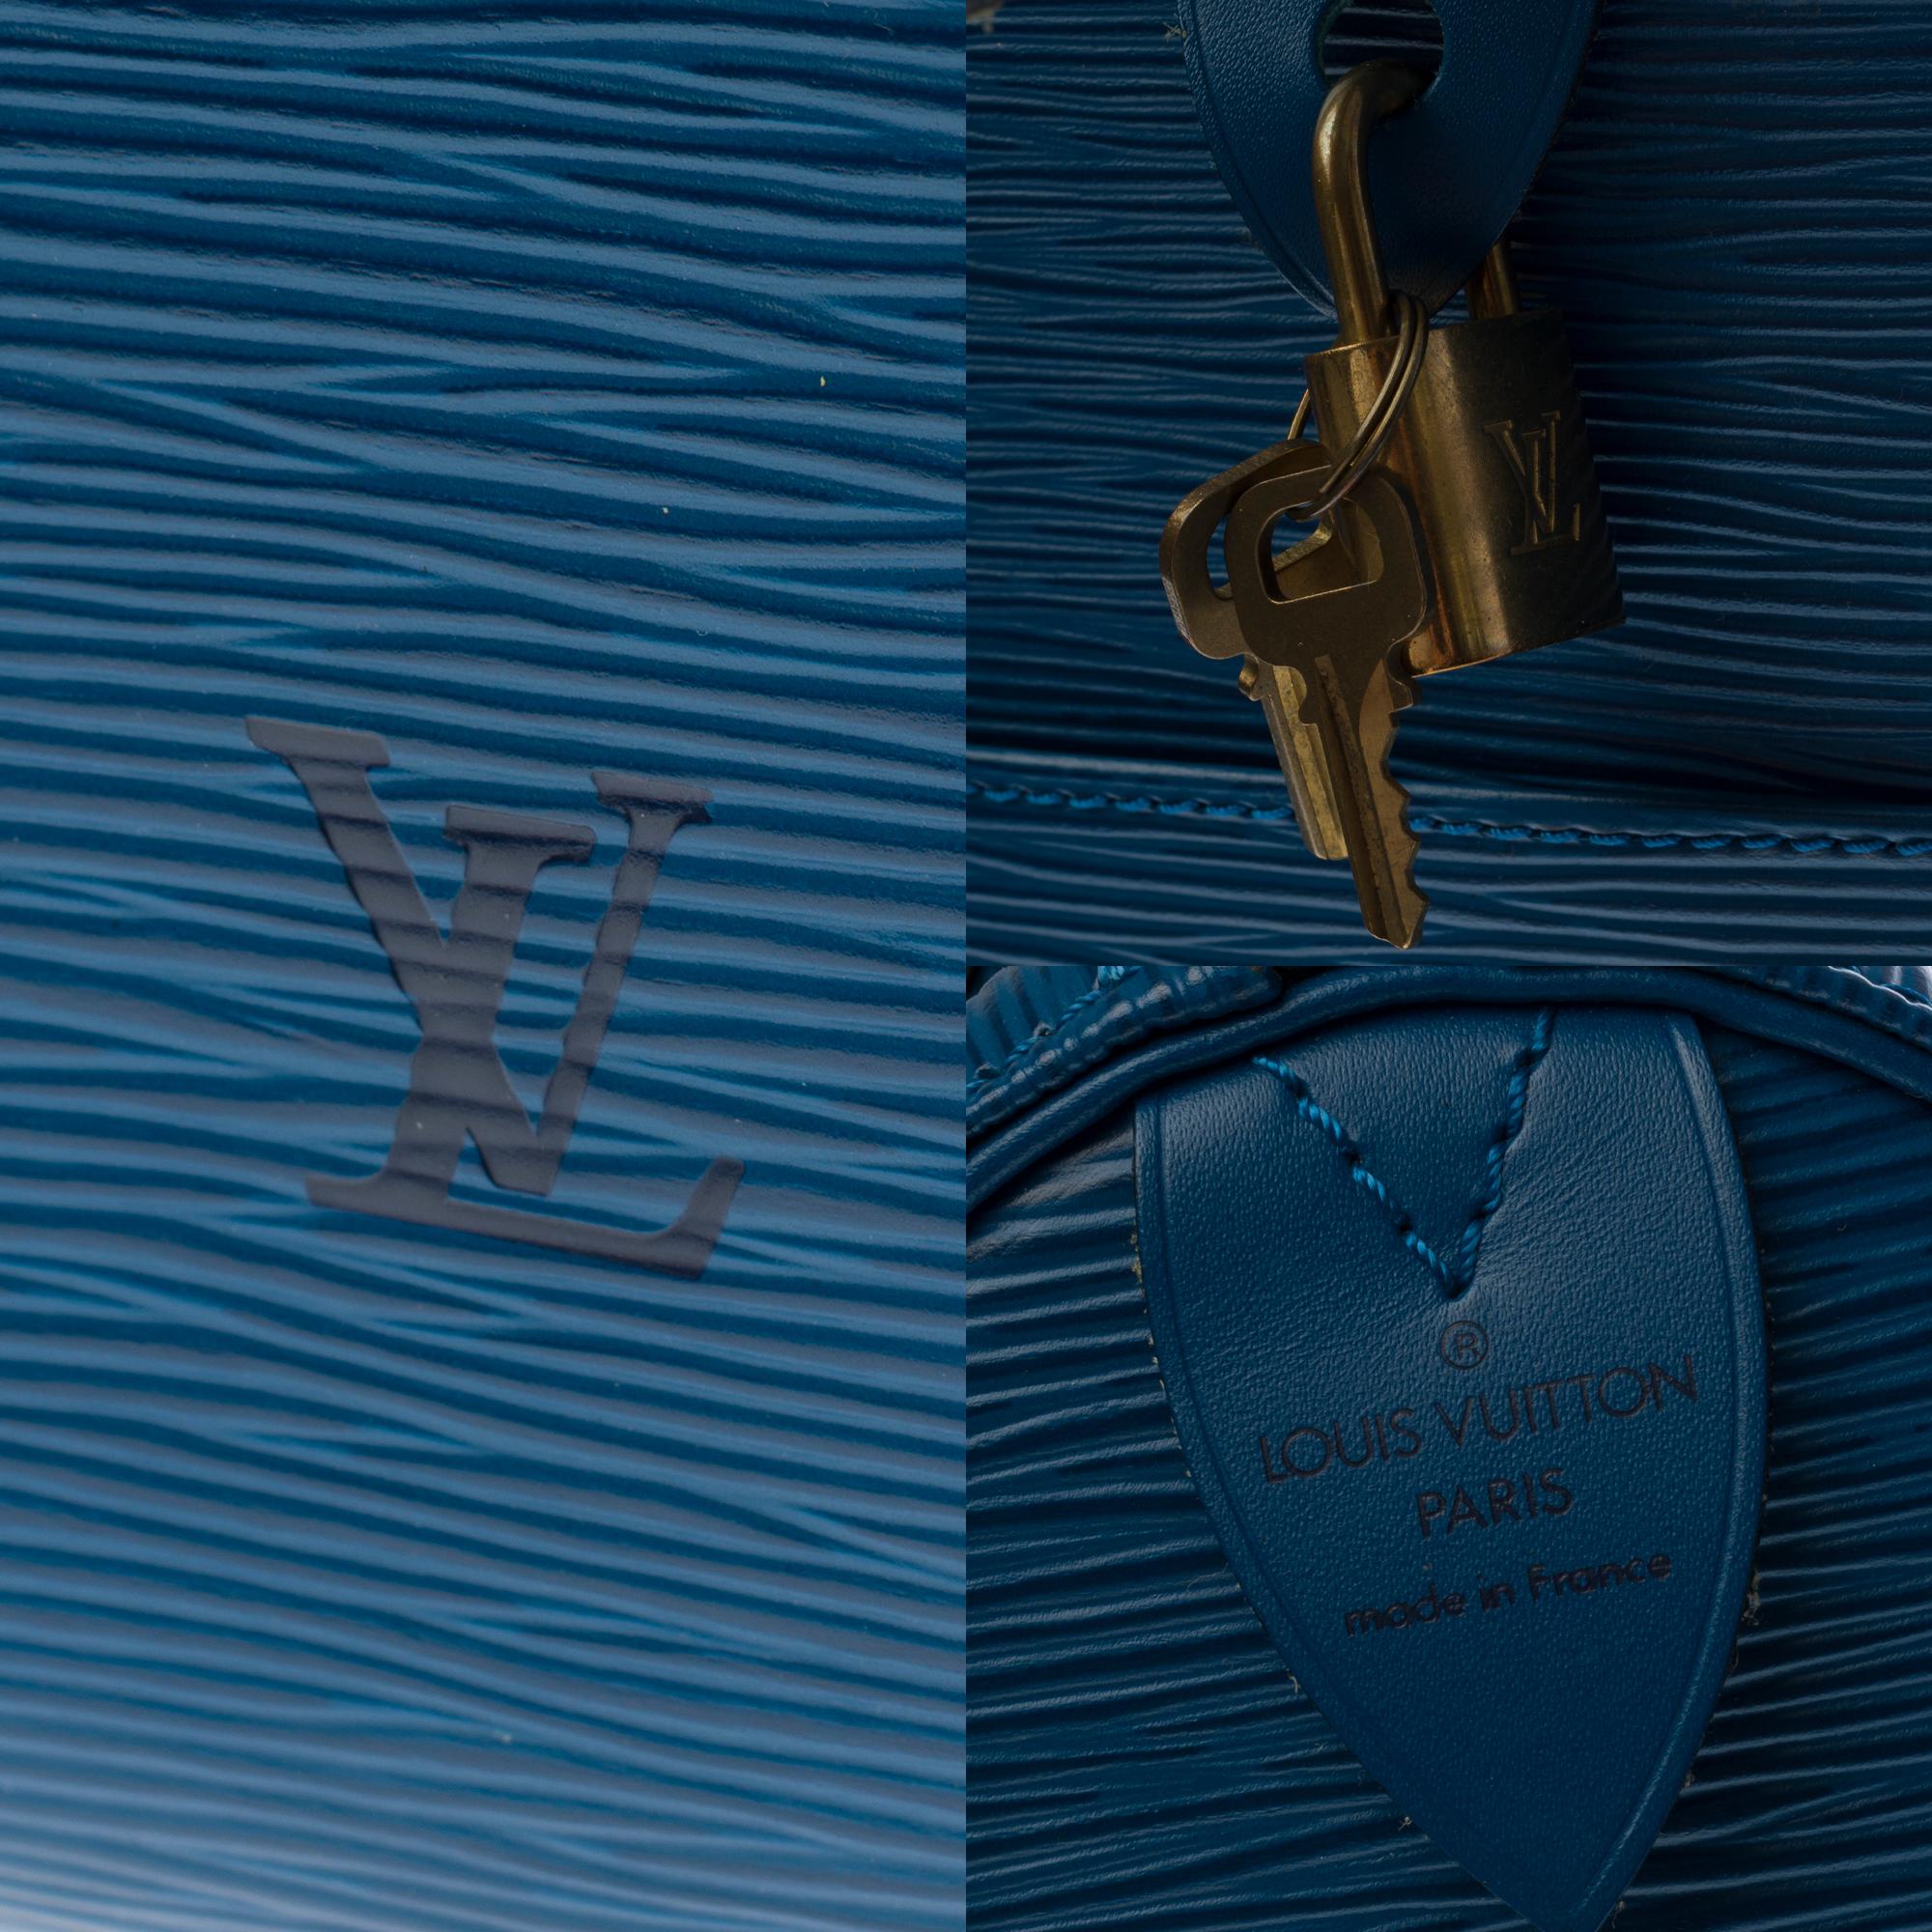 Blue Louis Vuitton Speedy 30 handbag in blue épi leather and gold hardware